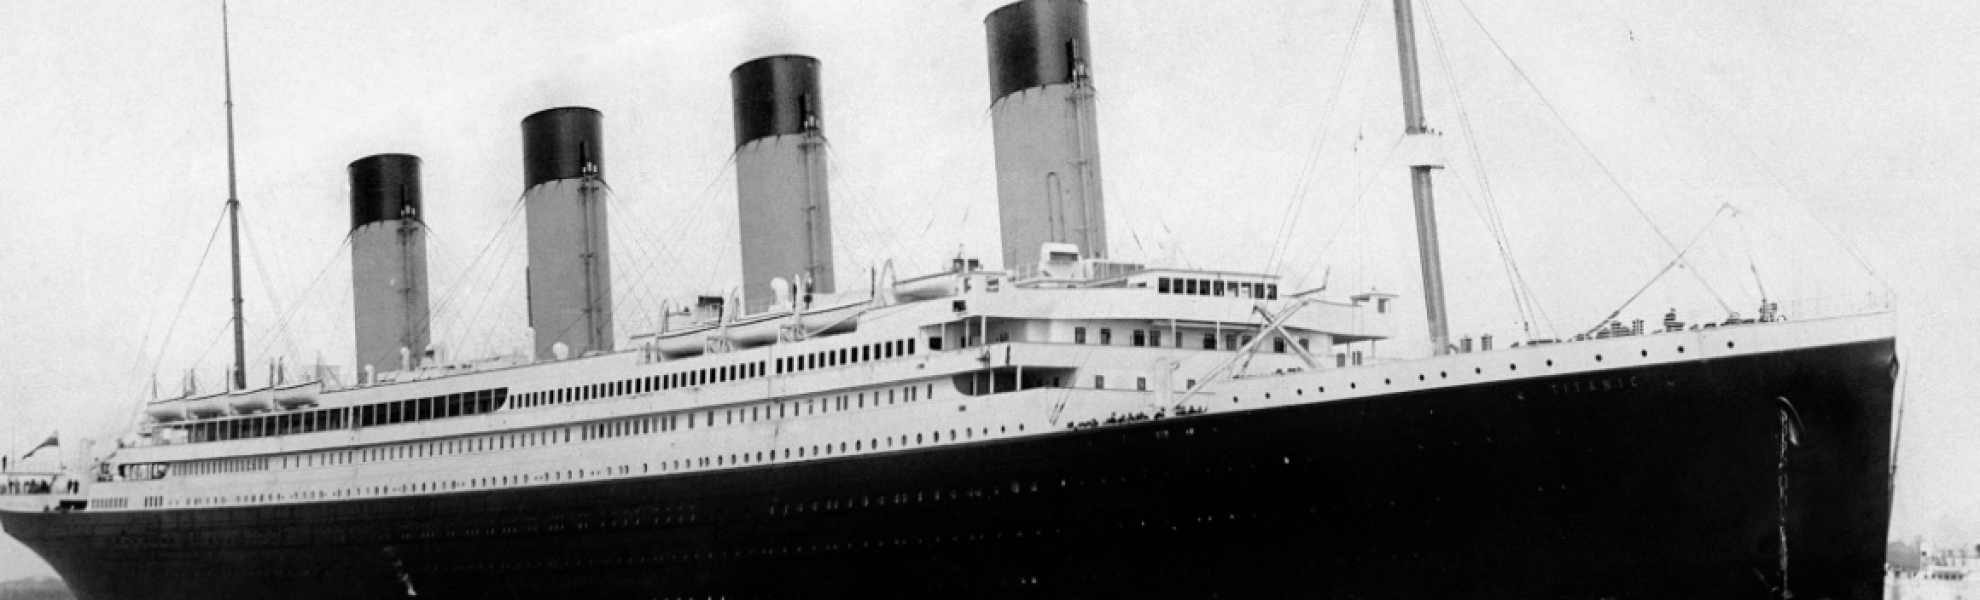 Image of the titanic